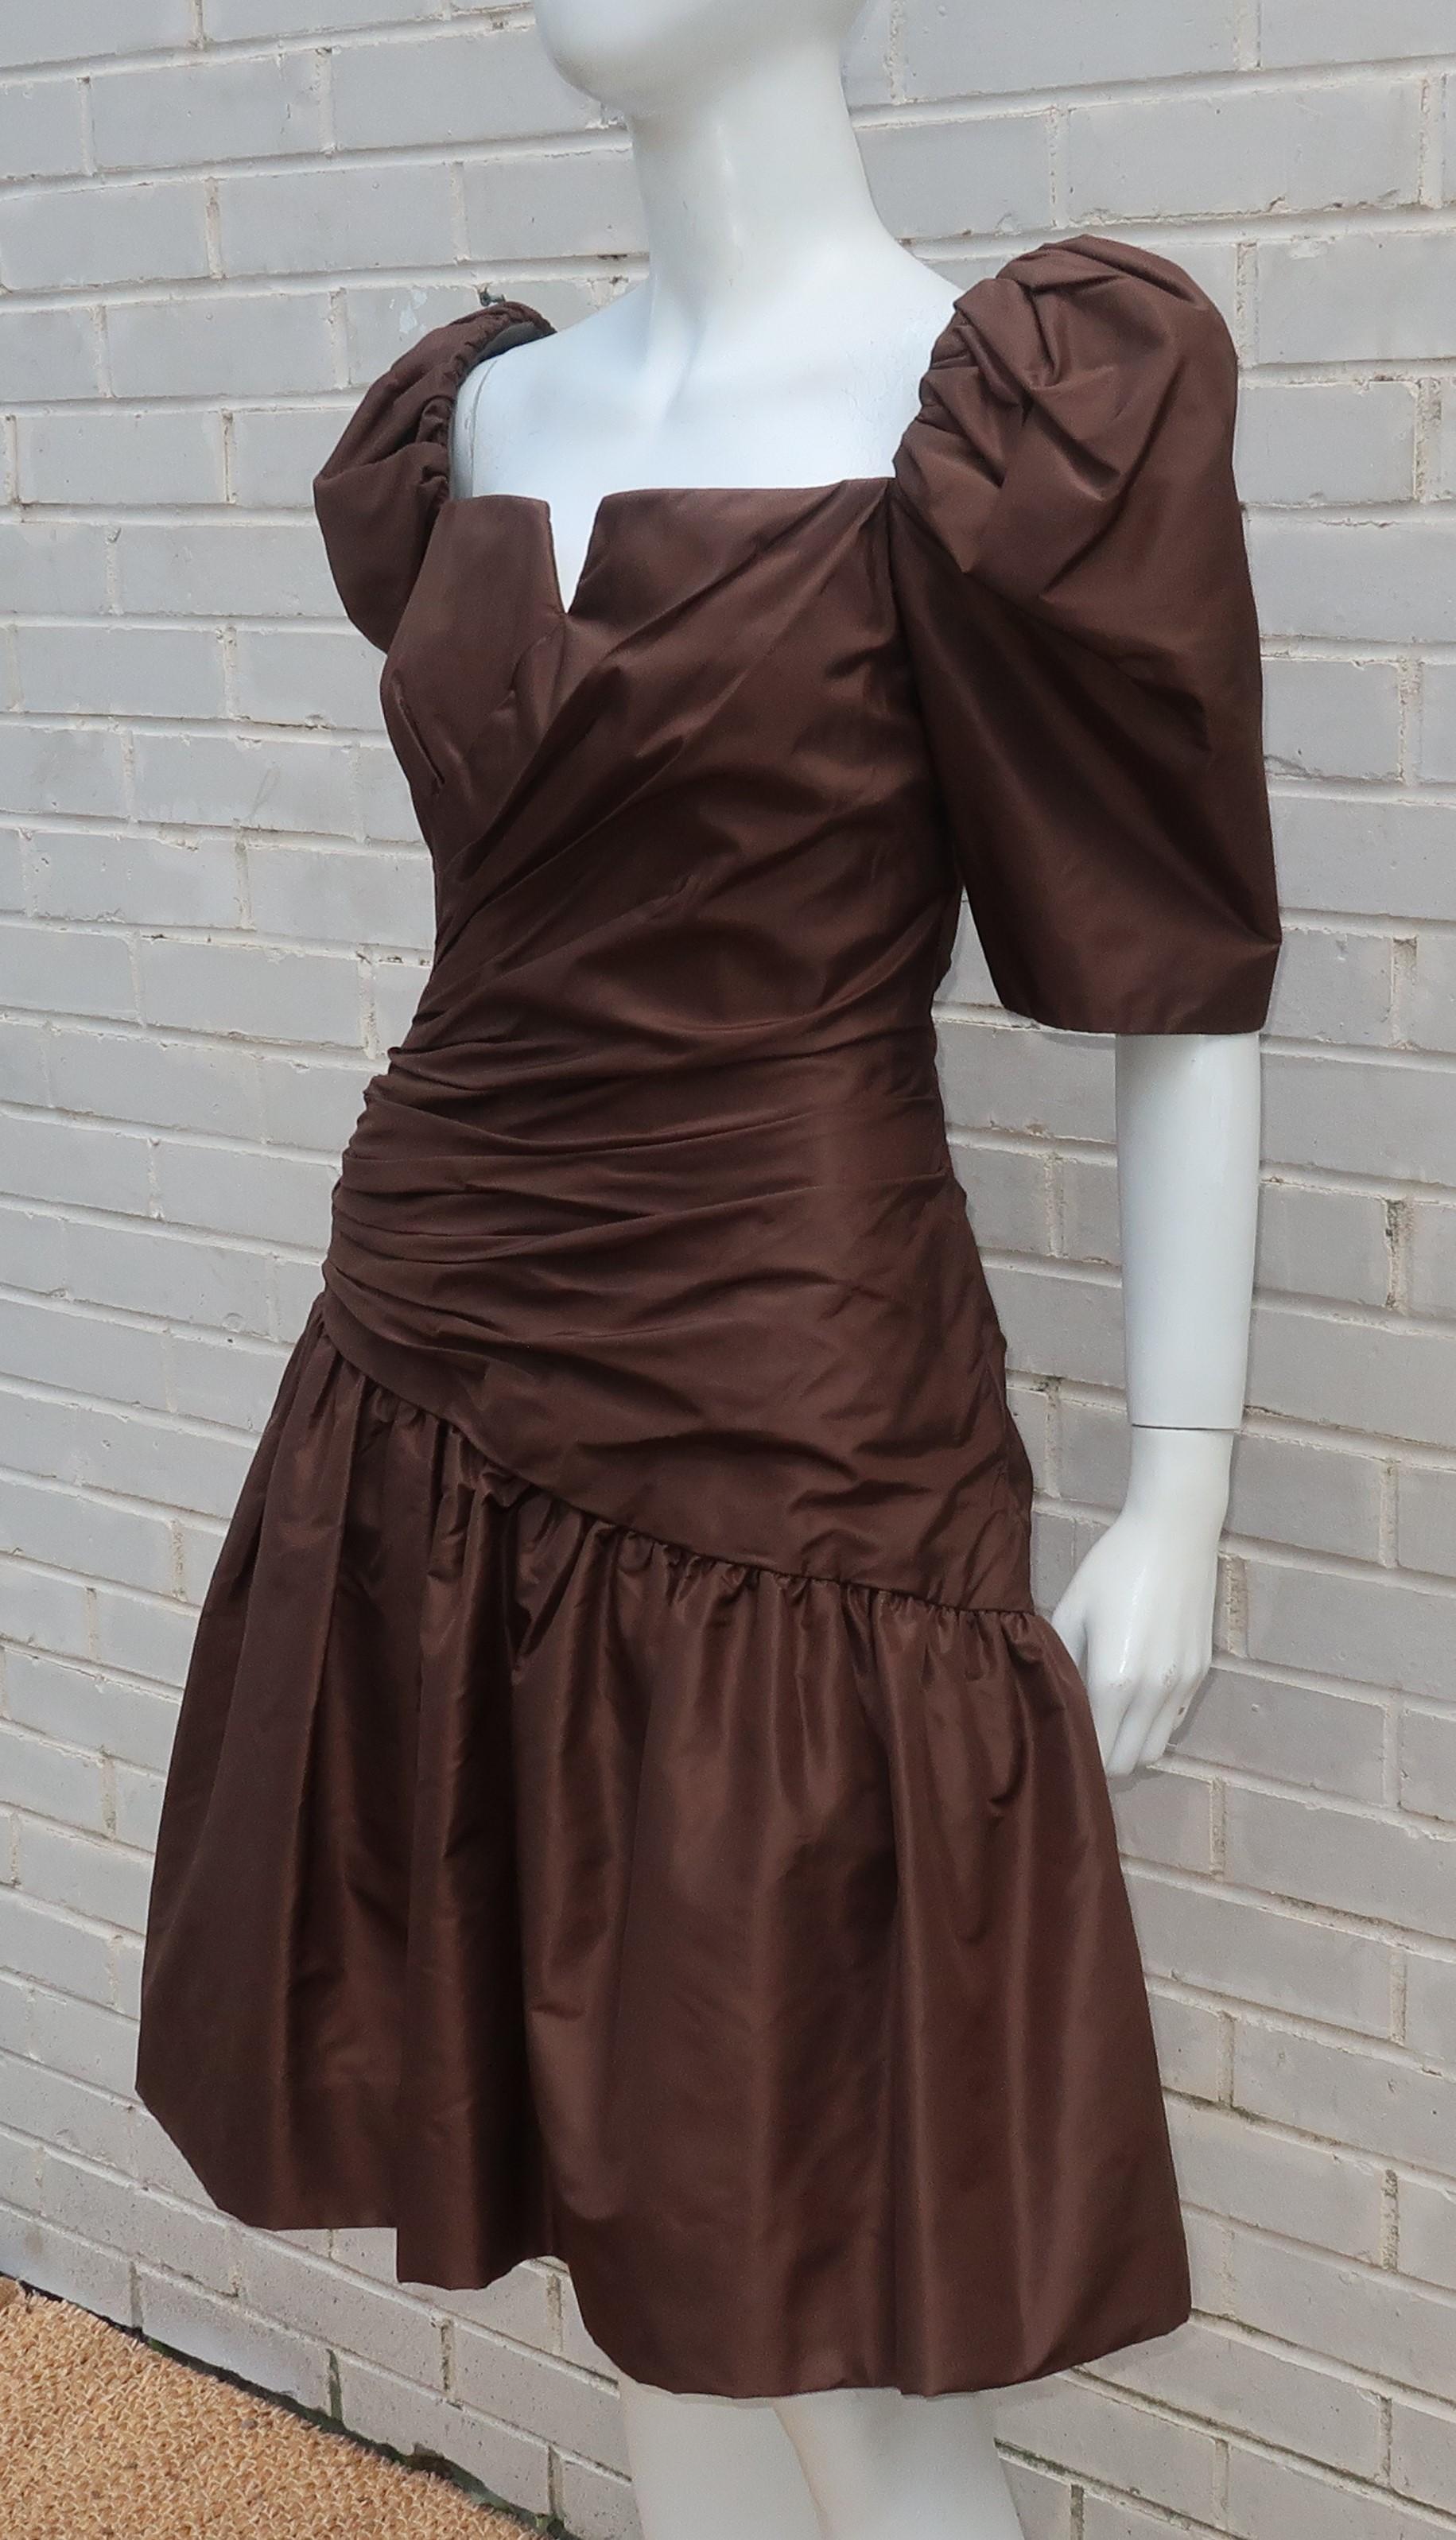 Scaasi Brown Taffeta Cocktail Dress, 1980’s In Good Condition For Sale In Atlanta, GA